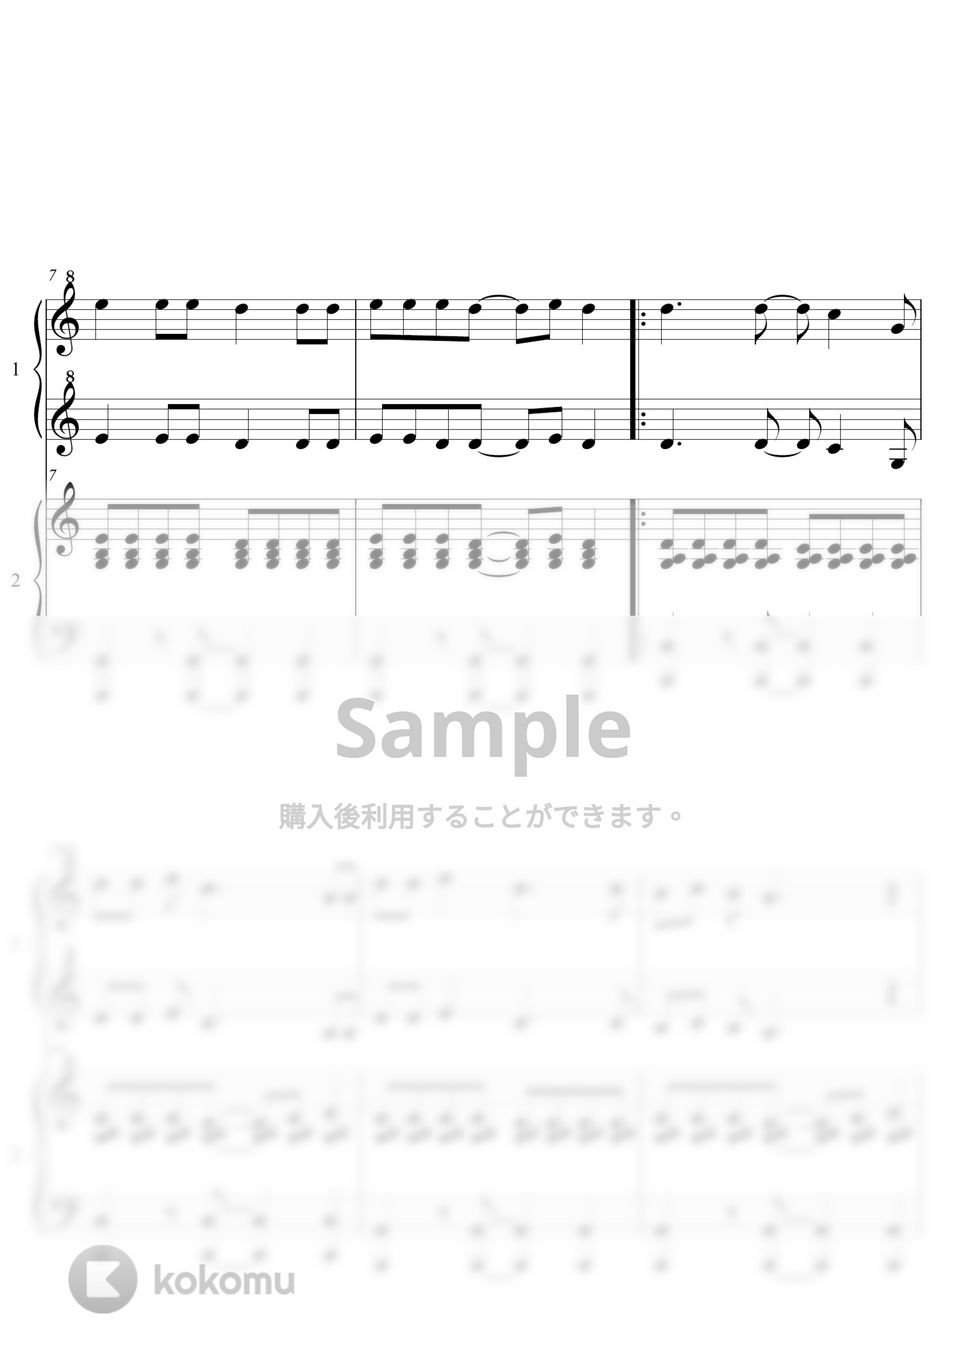 Wham! - Last Christmas (4 hands) (ピアノ連弾 / 伴奏音源付き) by A-sam